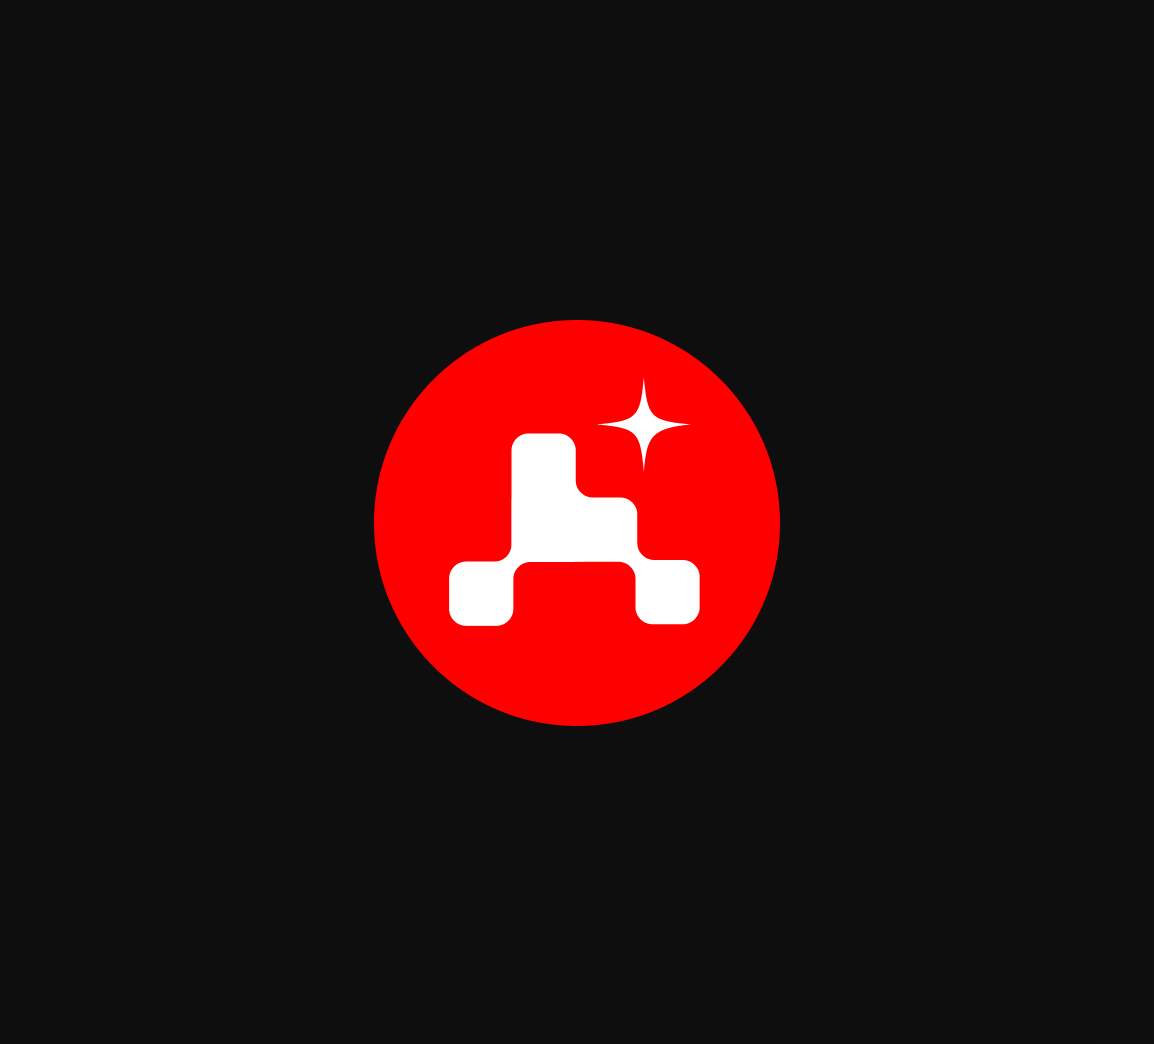 Mars 2020 Logo Mark by House of van Schneider